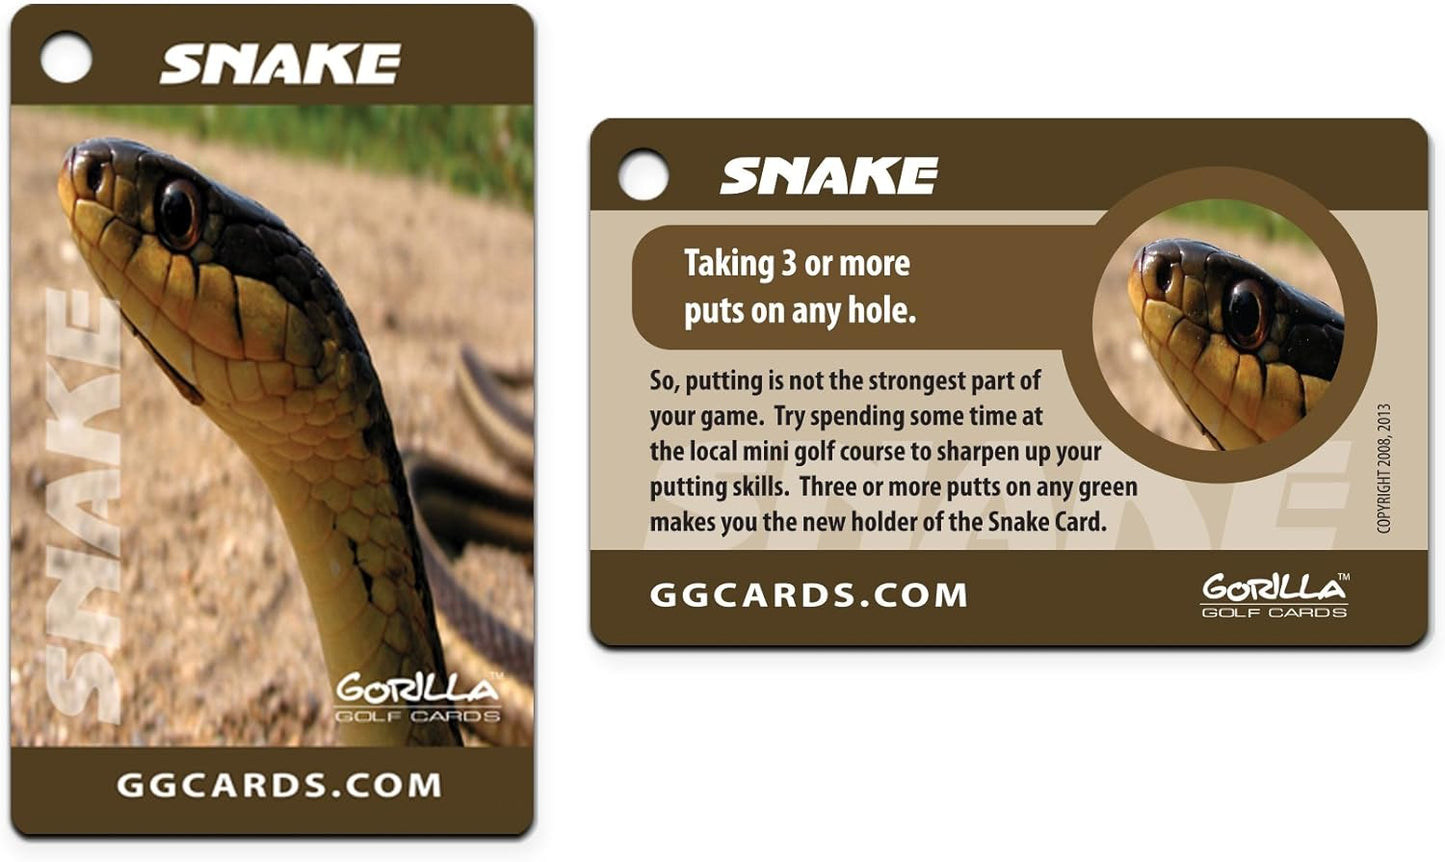 Gorilla Golf Cards